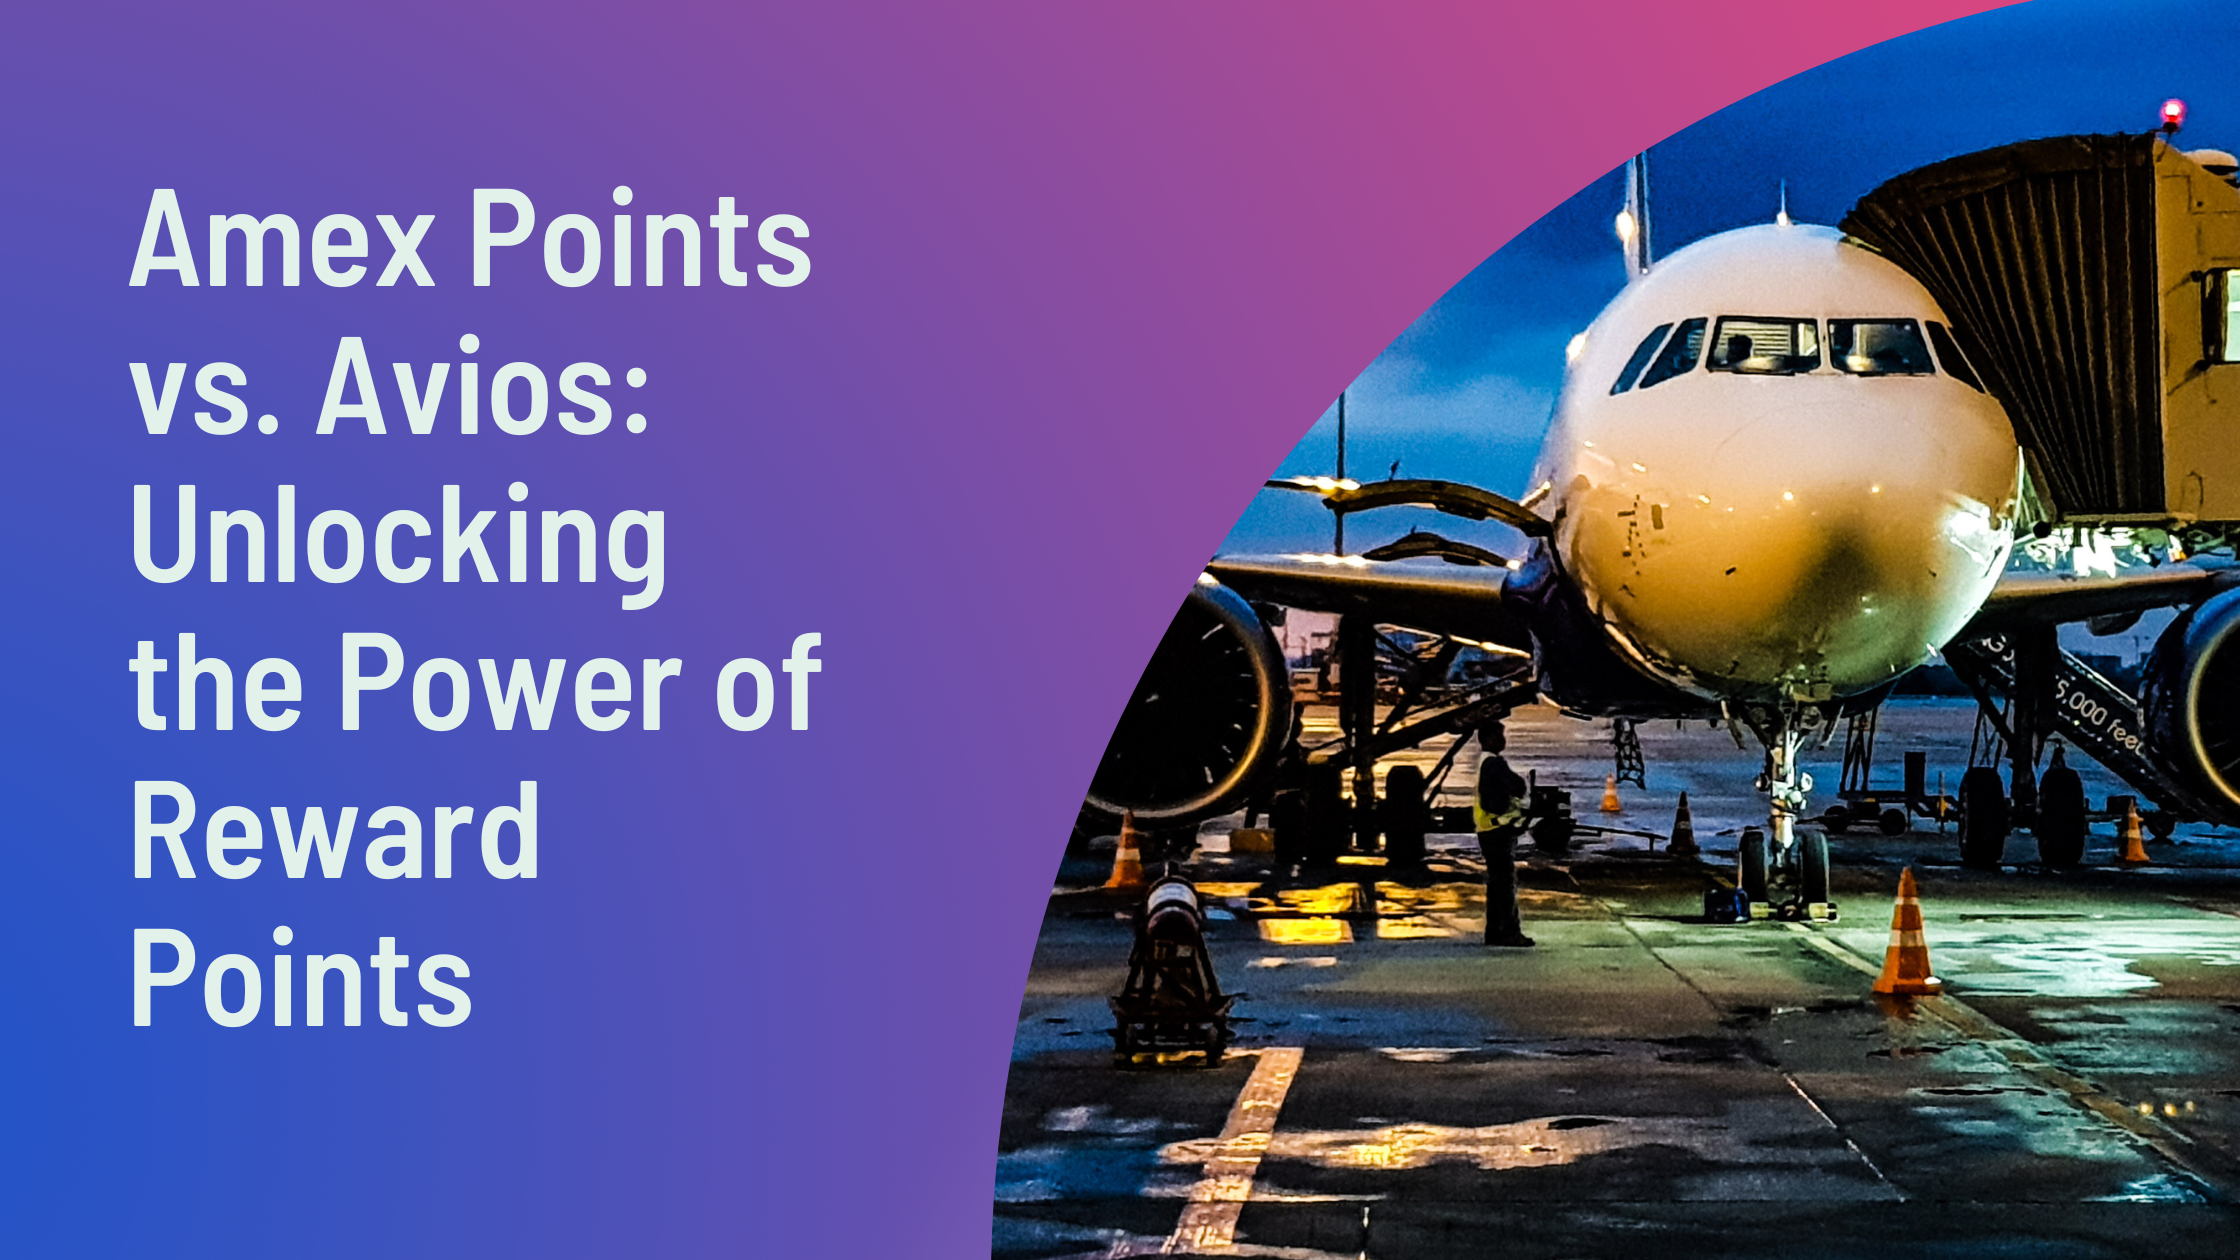 Amex Points vs. Avios: A Comparison of Reward Programs